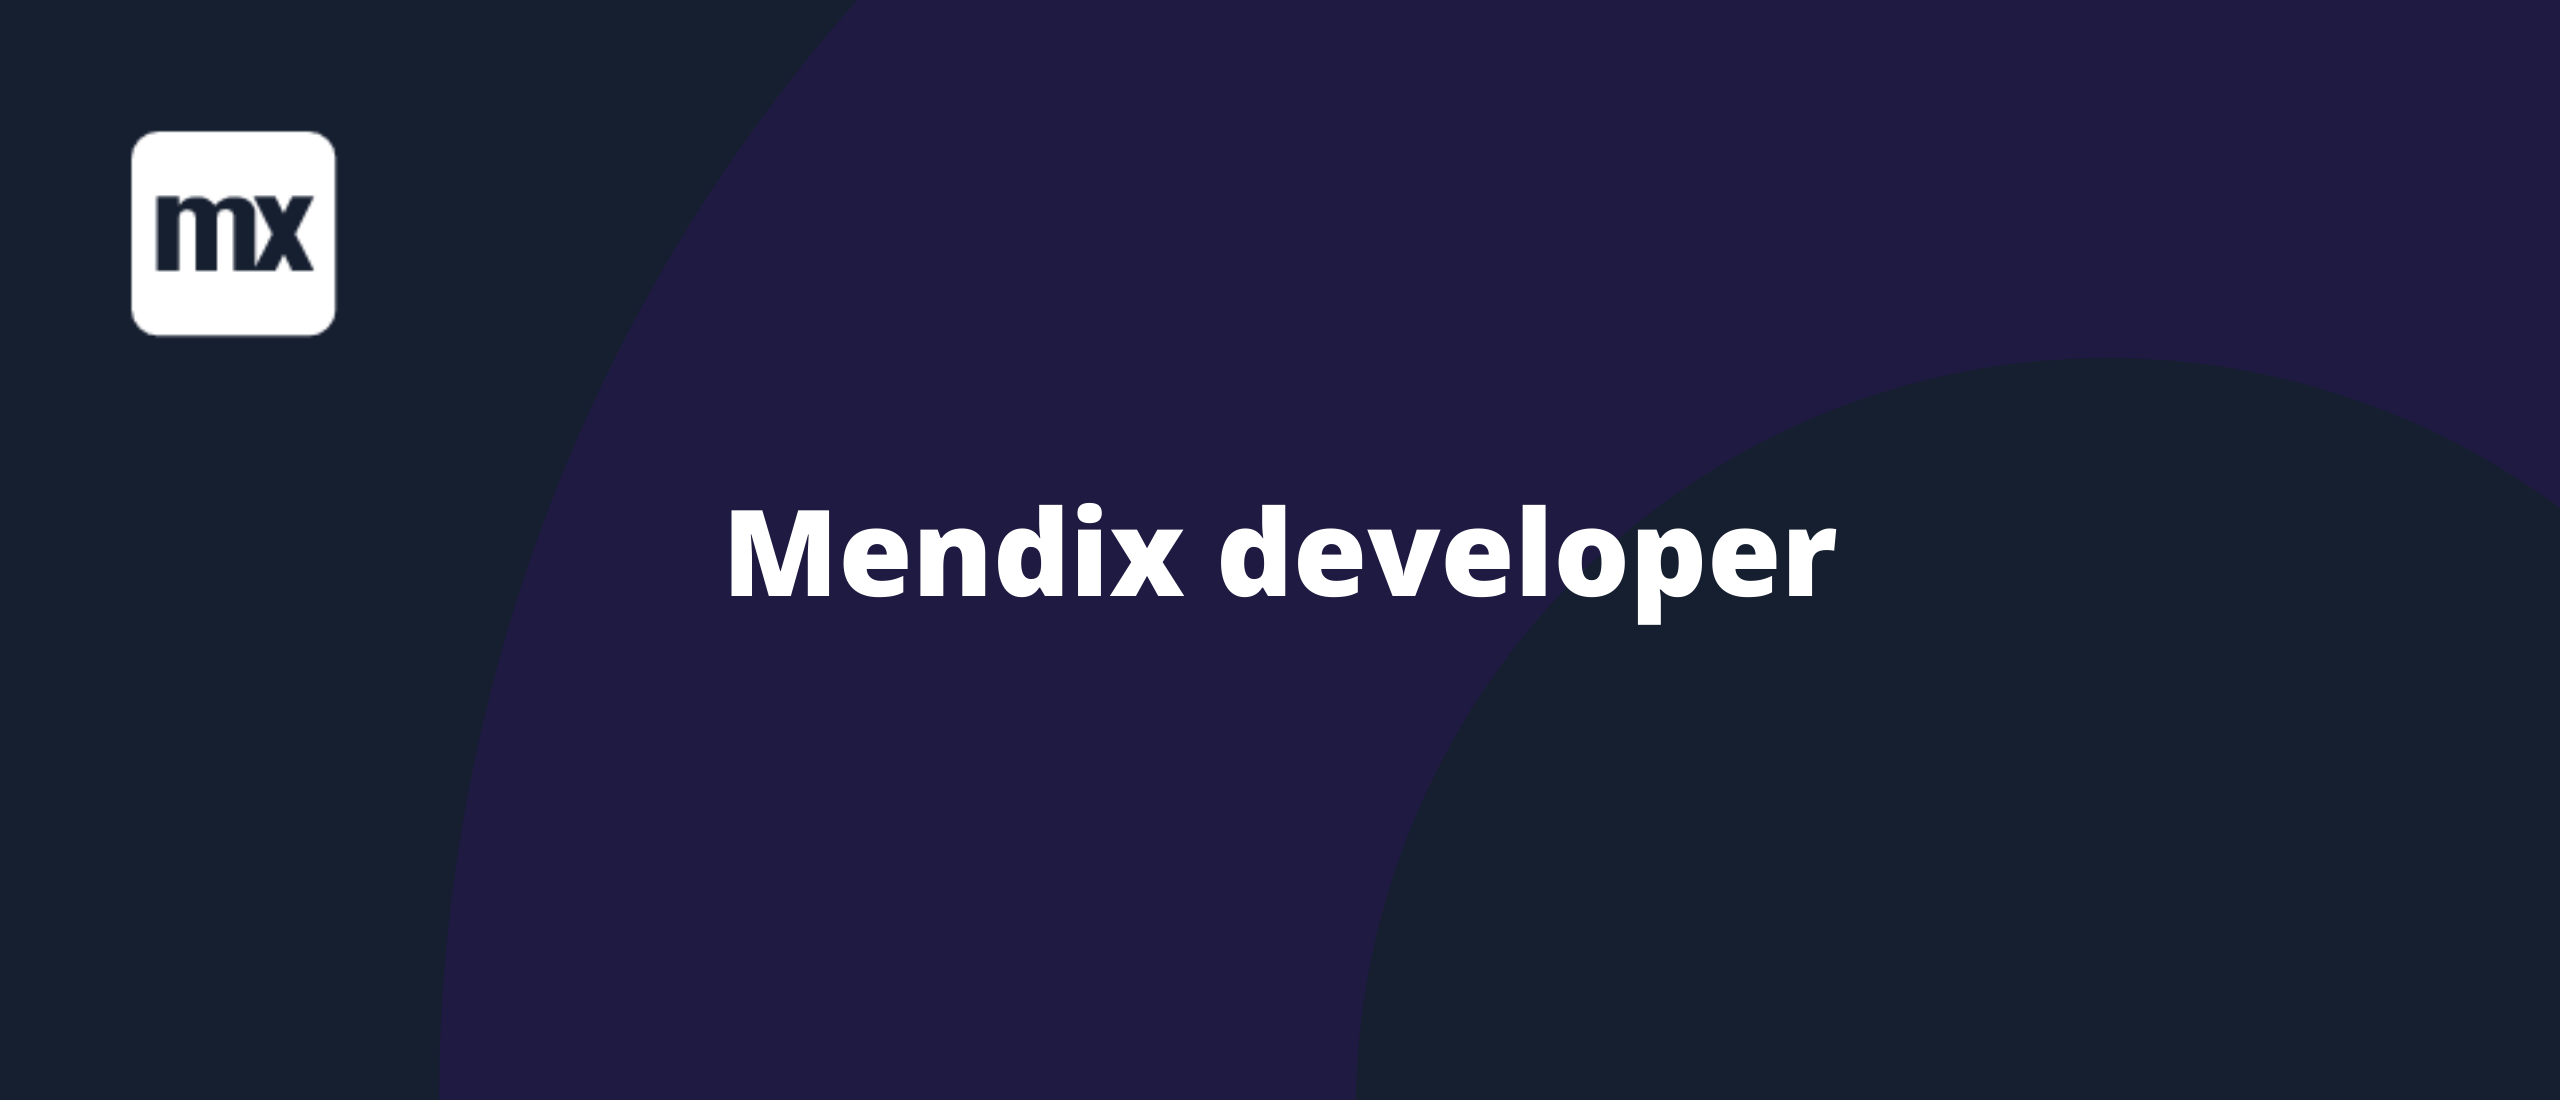 Menix developer